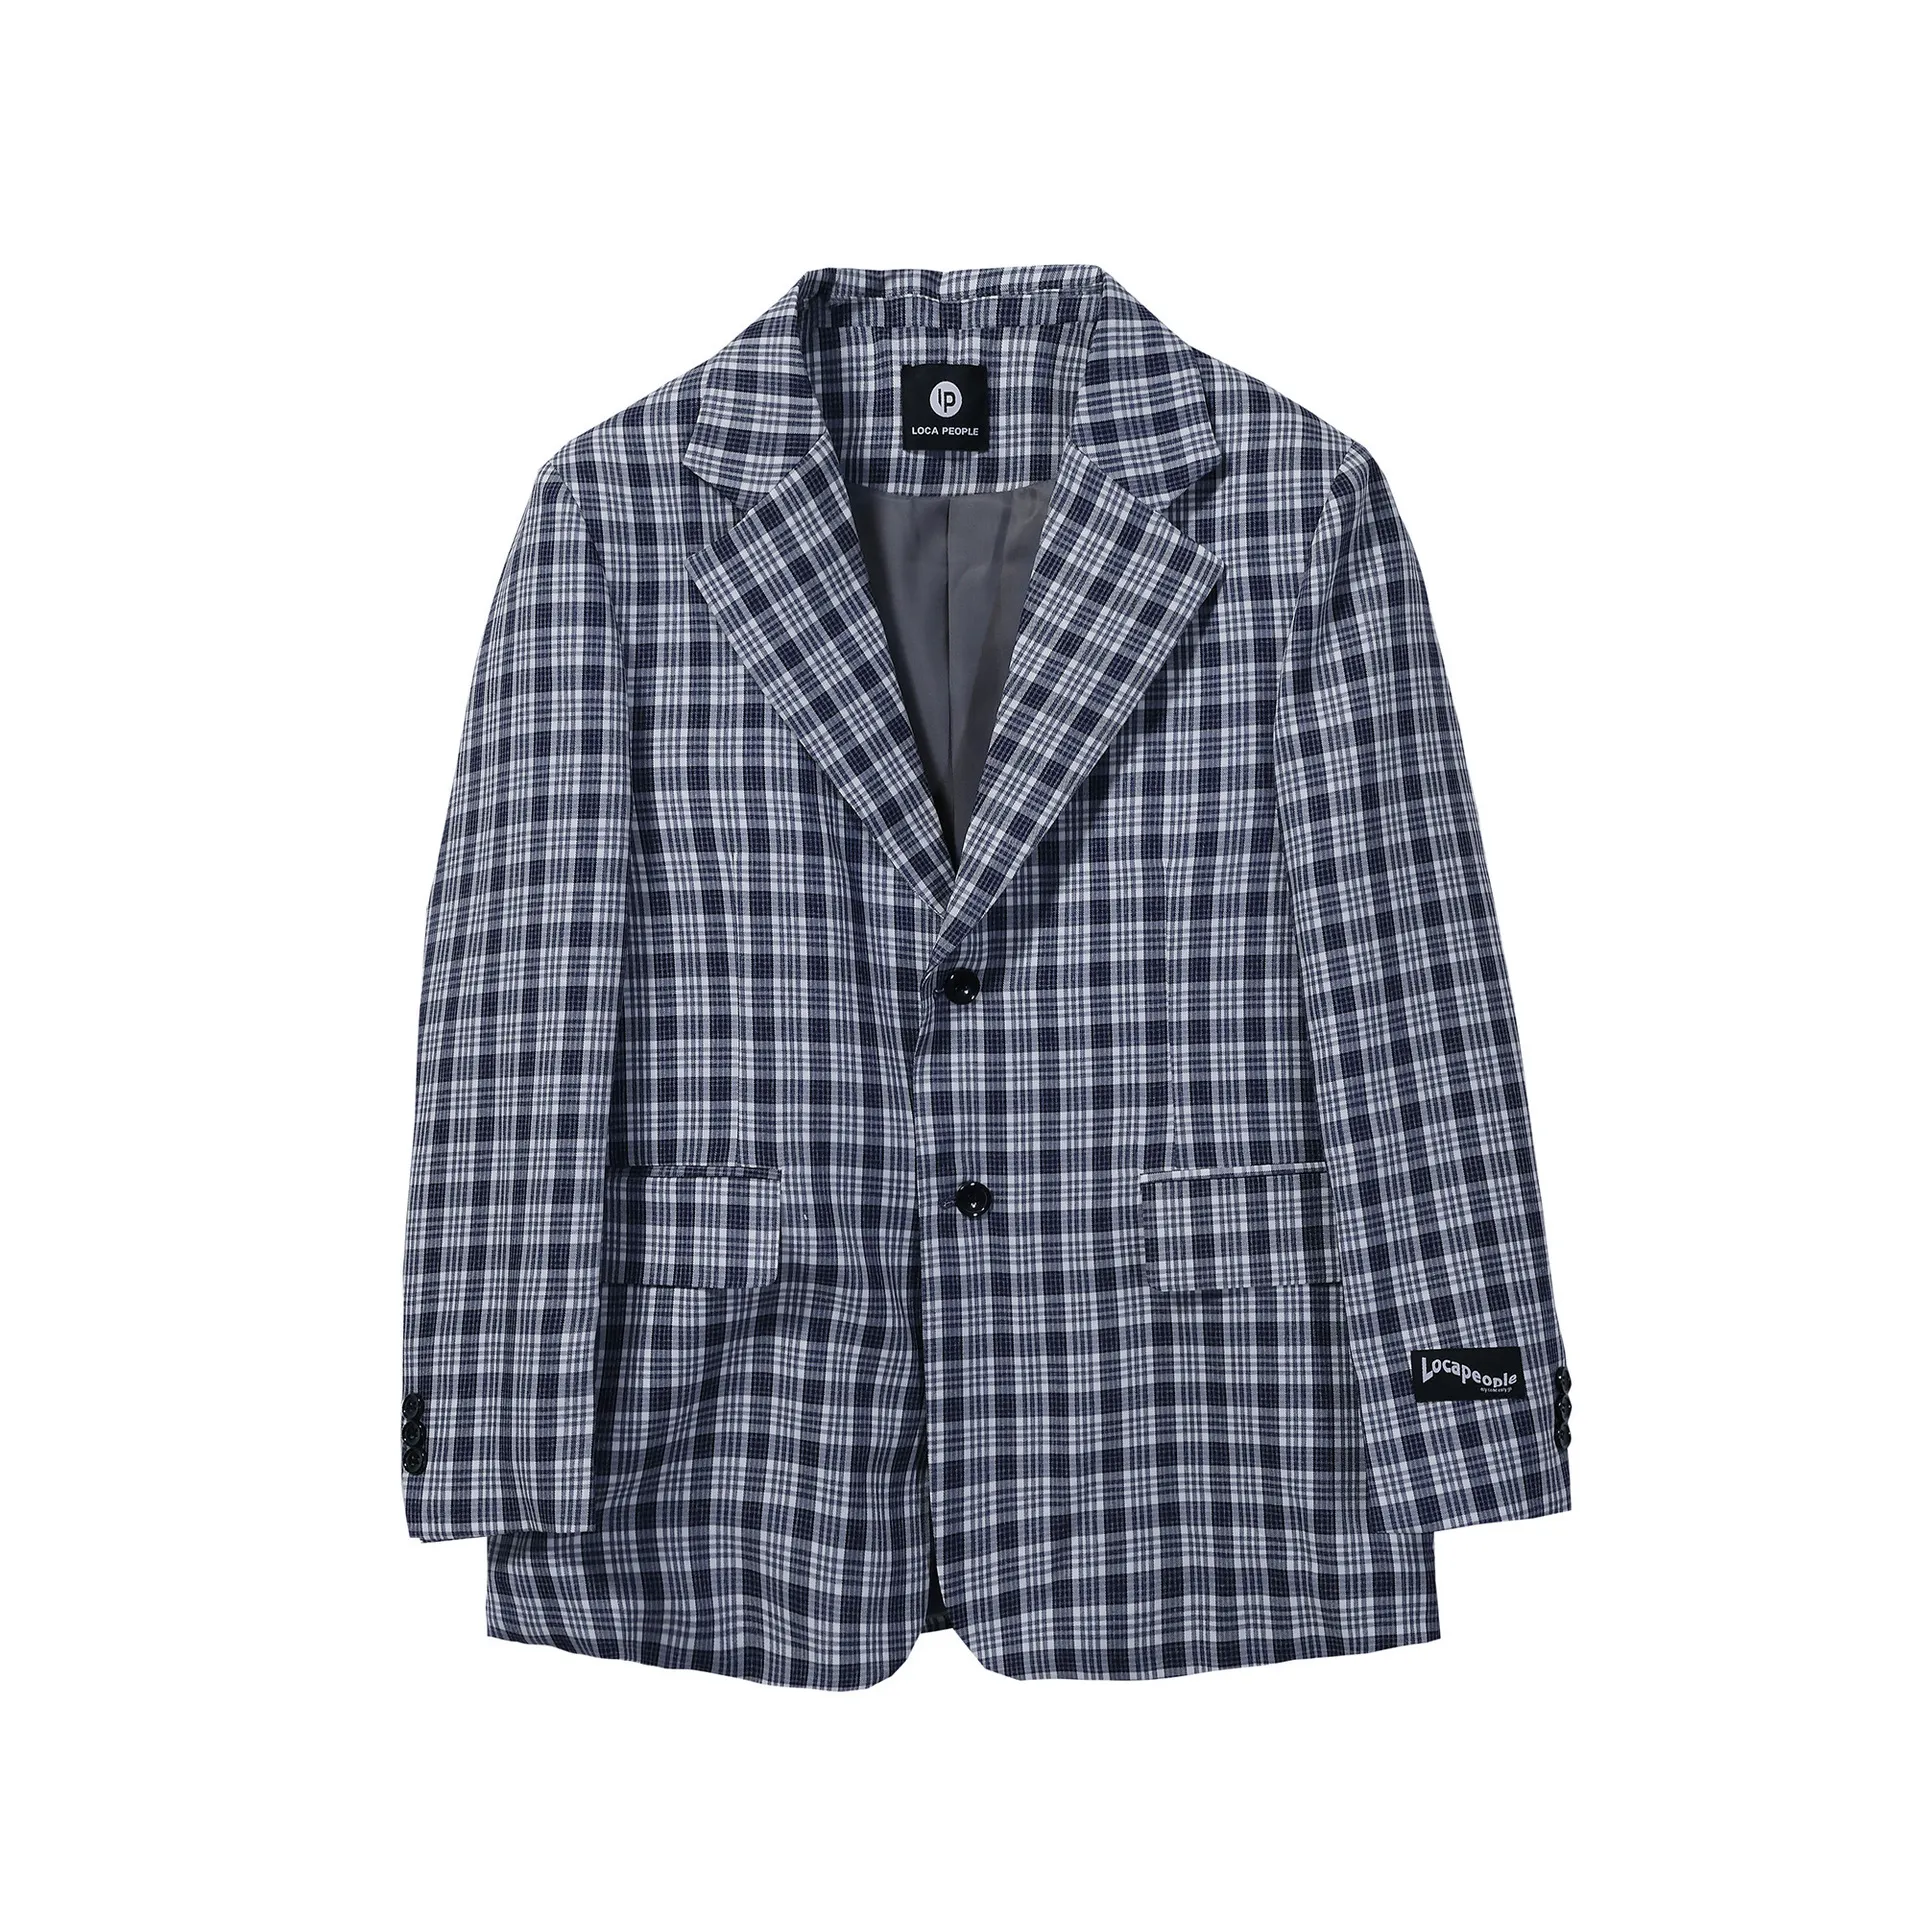 Outono e inverno novo terno, jaqueta de terno xadrez coreano masculino